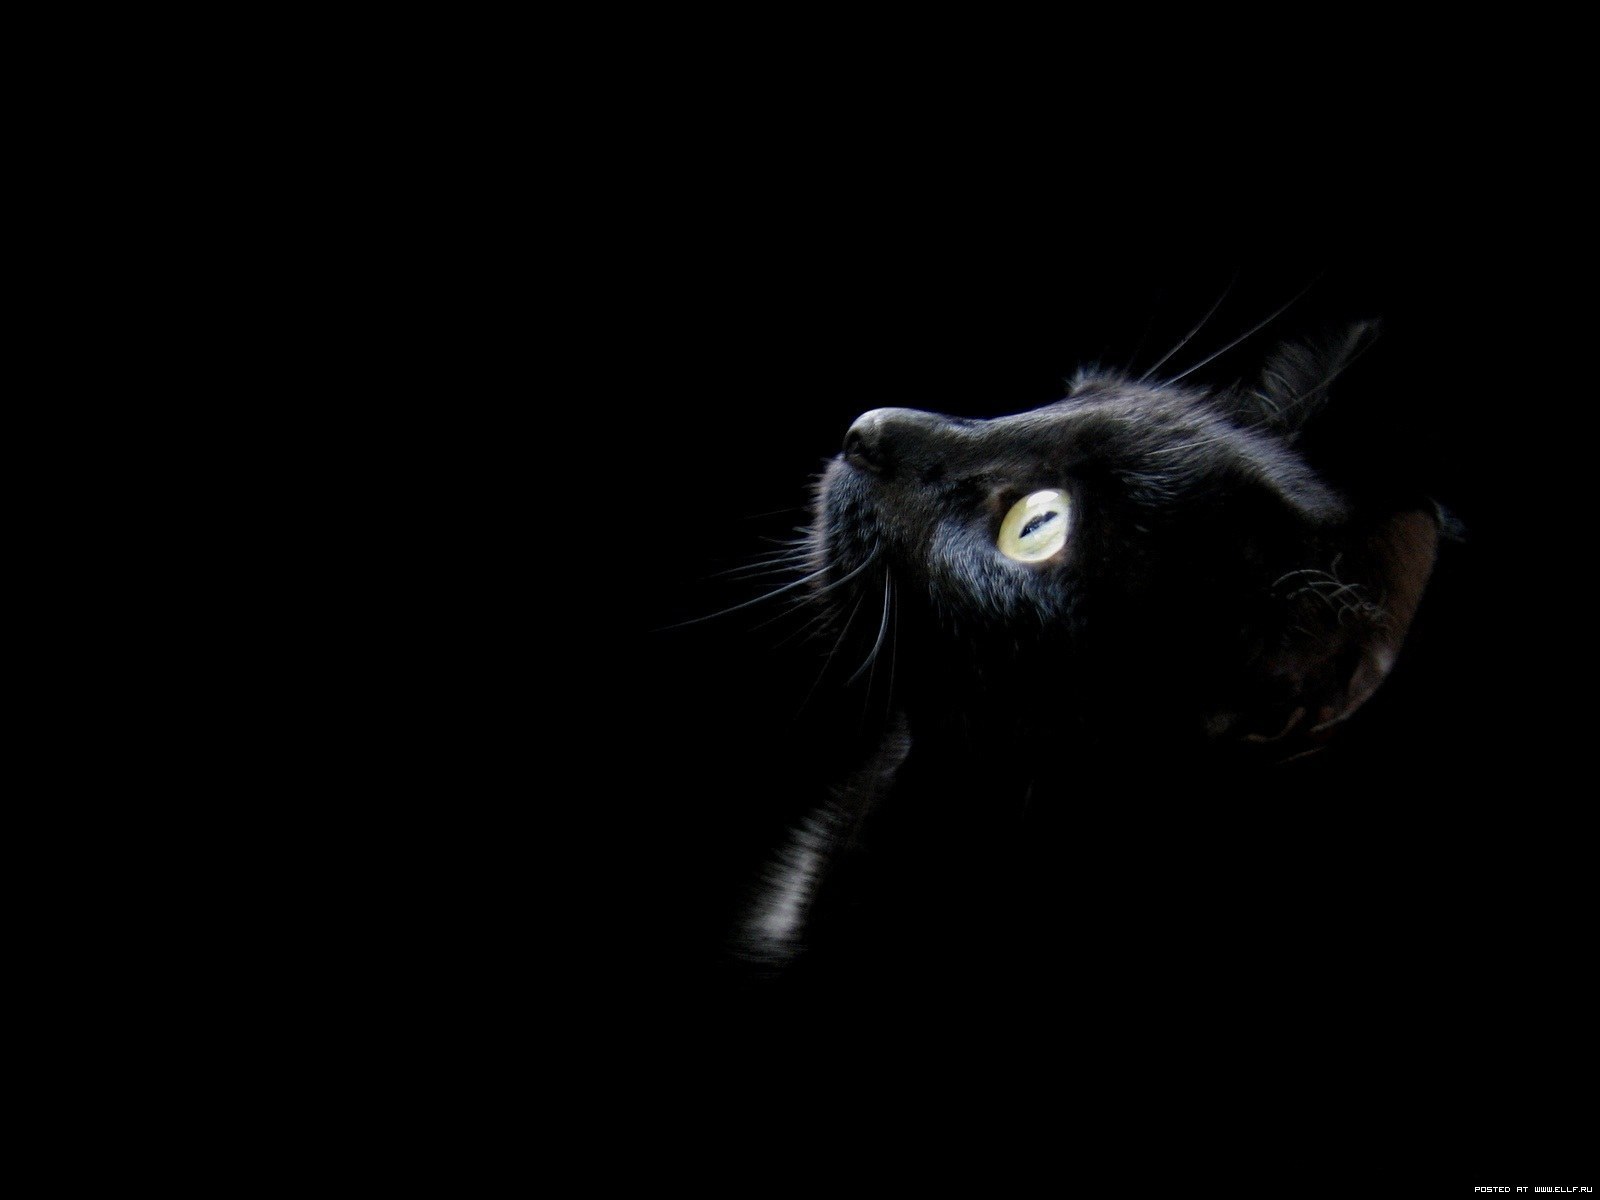 Amusing kitten on a black background